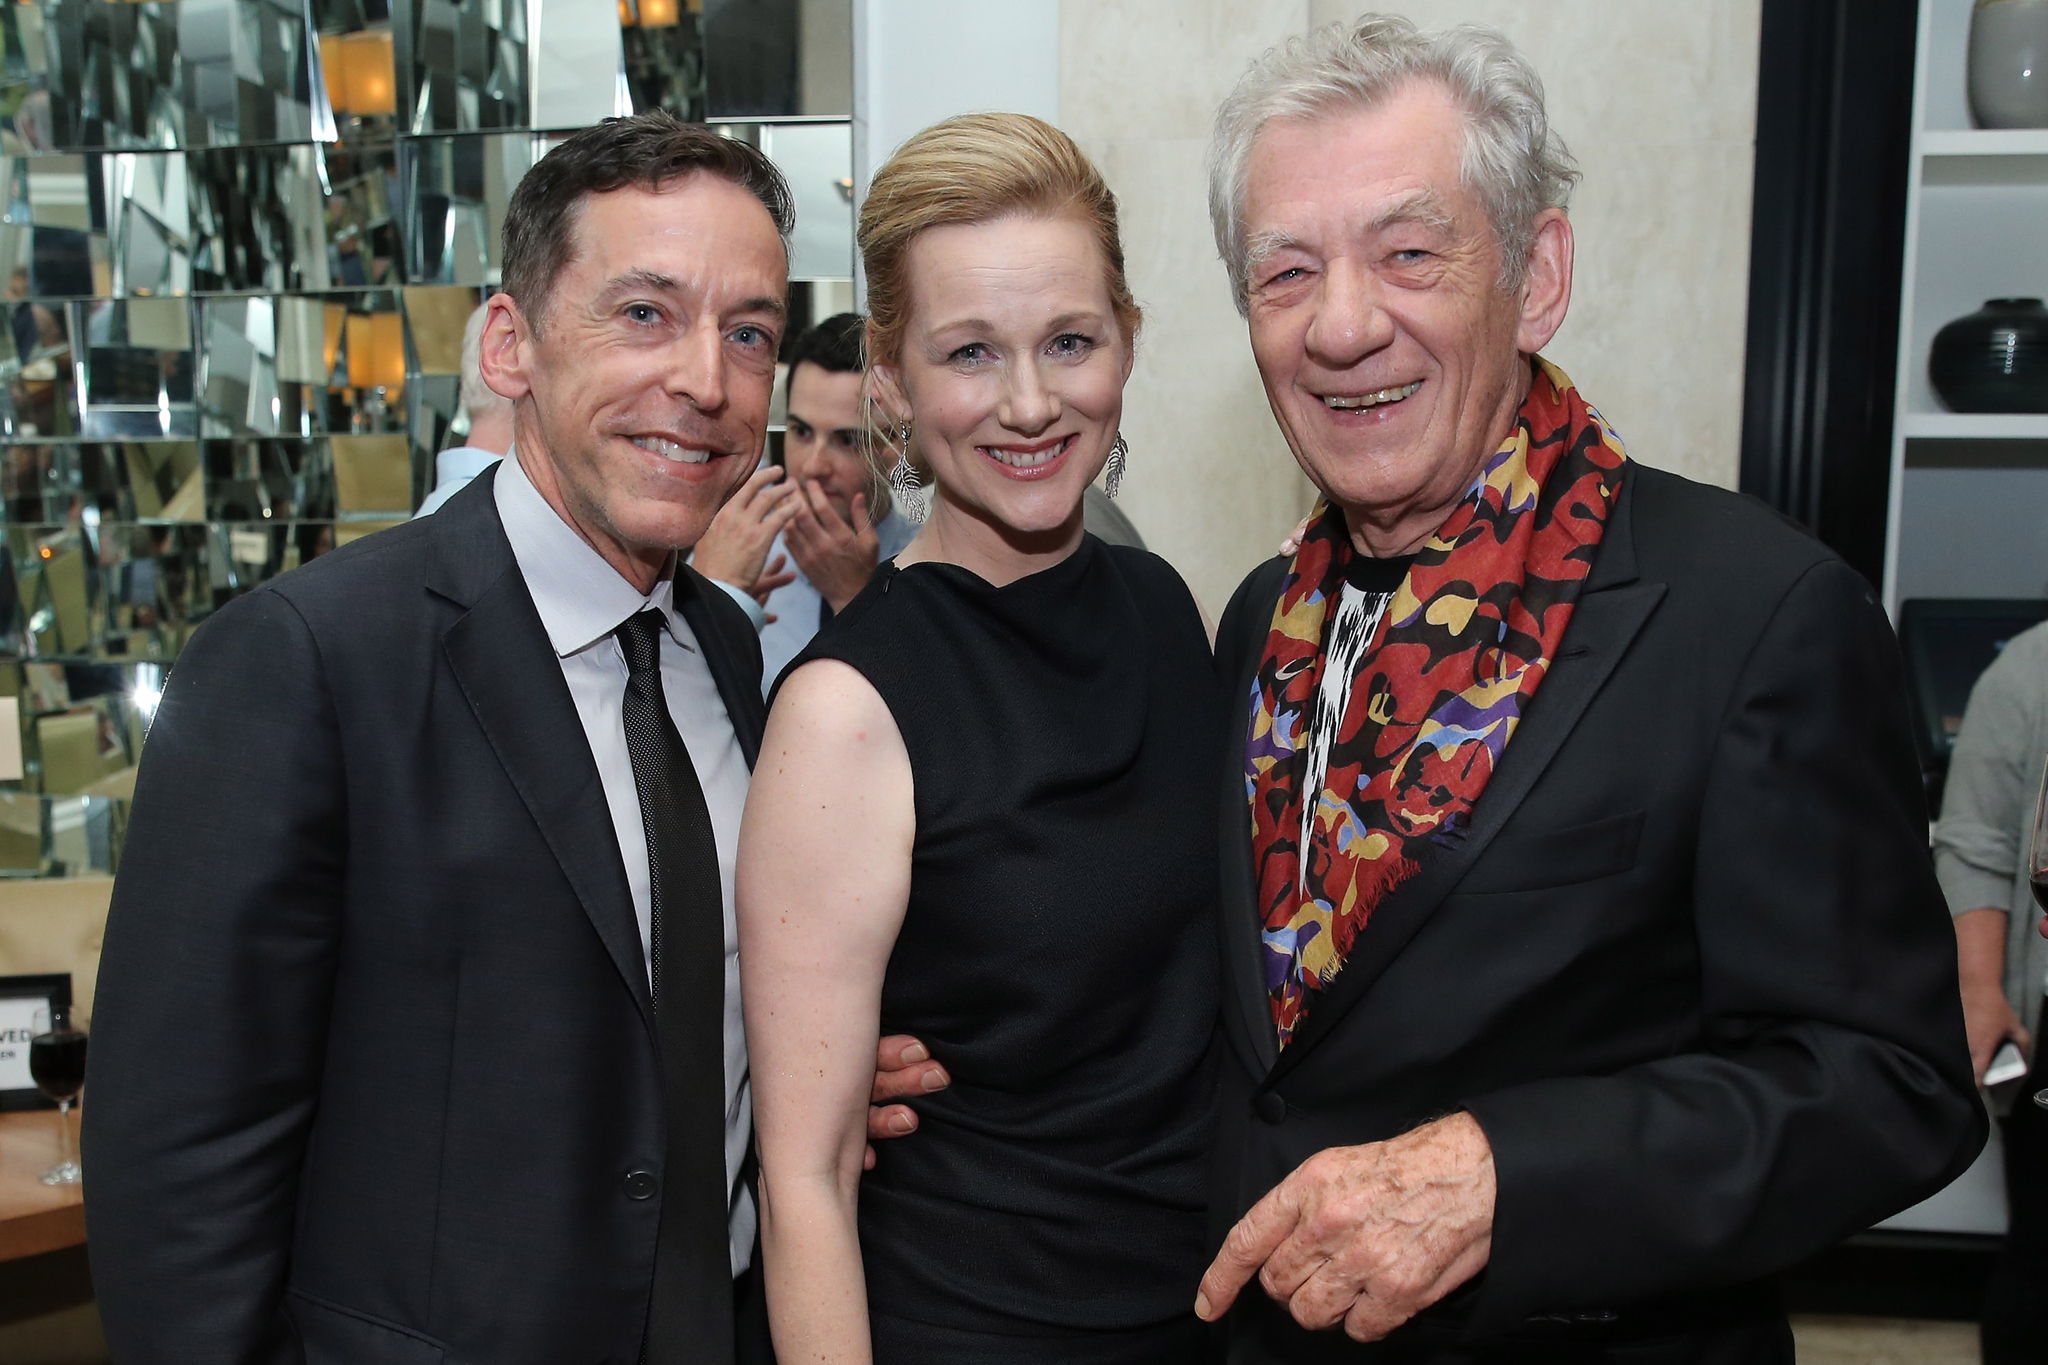 Laura Linney, Ian McKellen and Steve Schoch at event of Mr. Holmes (2015)